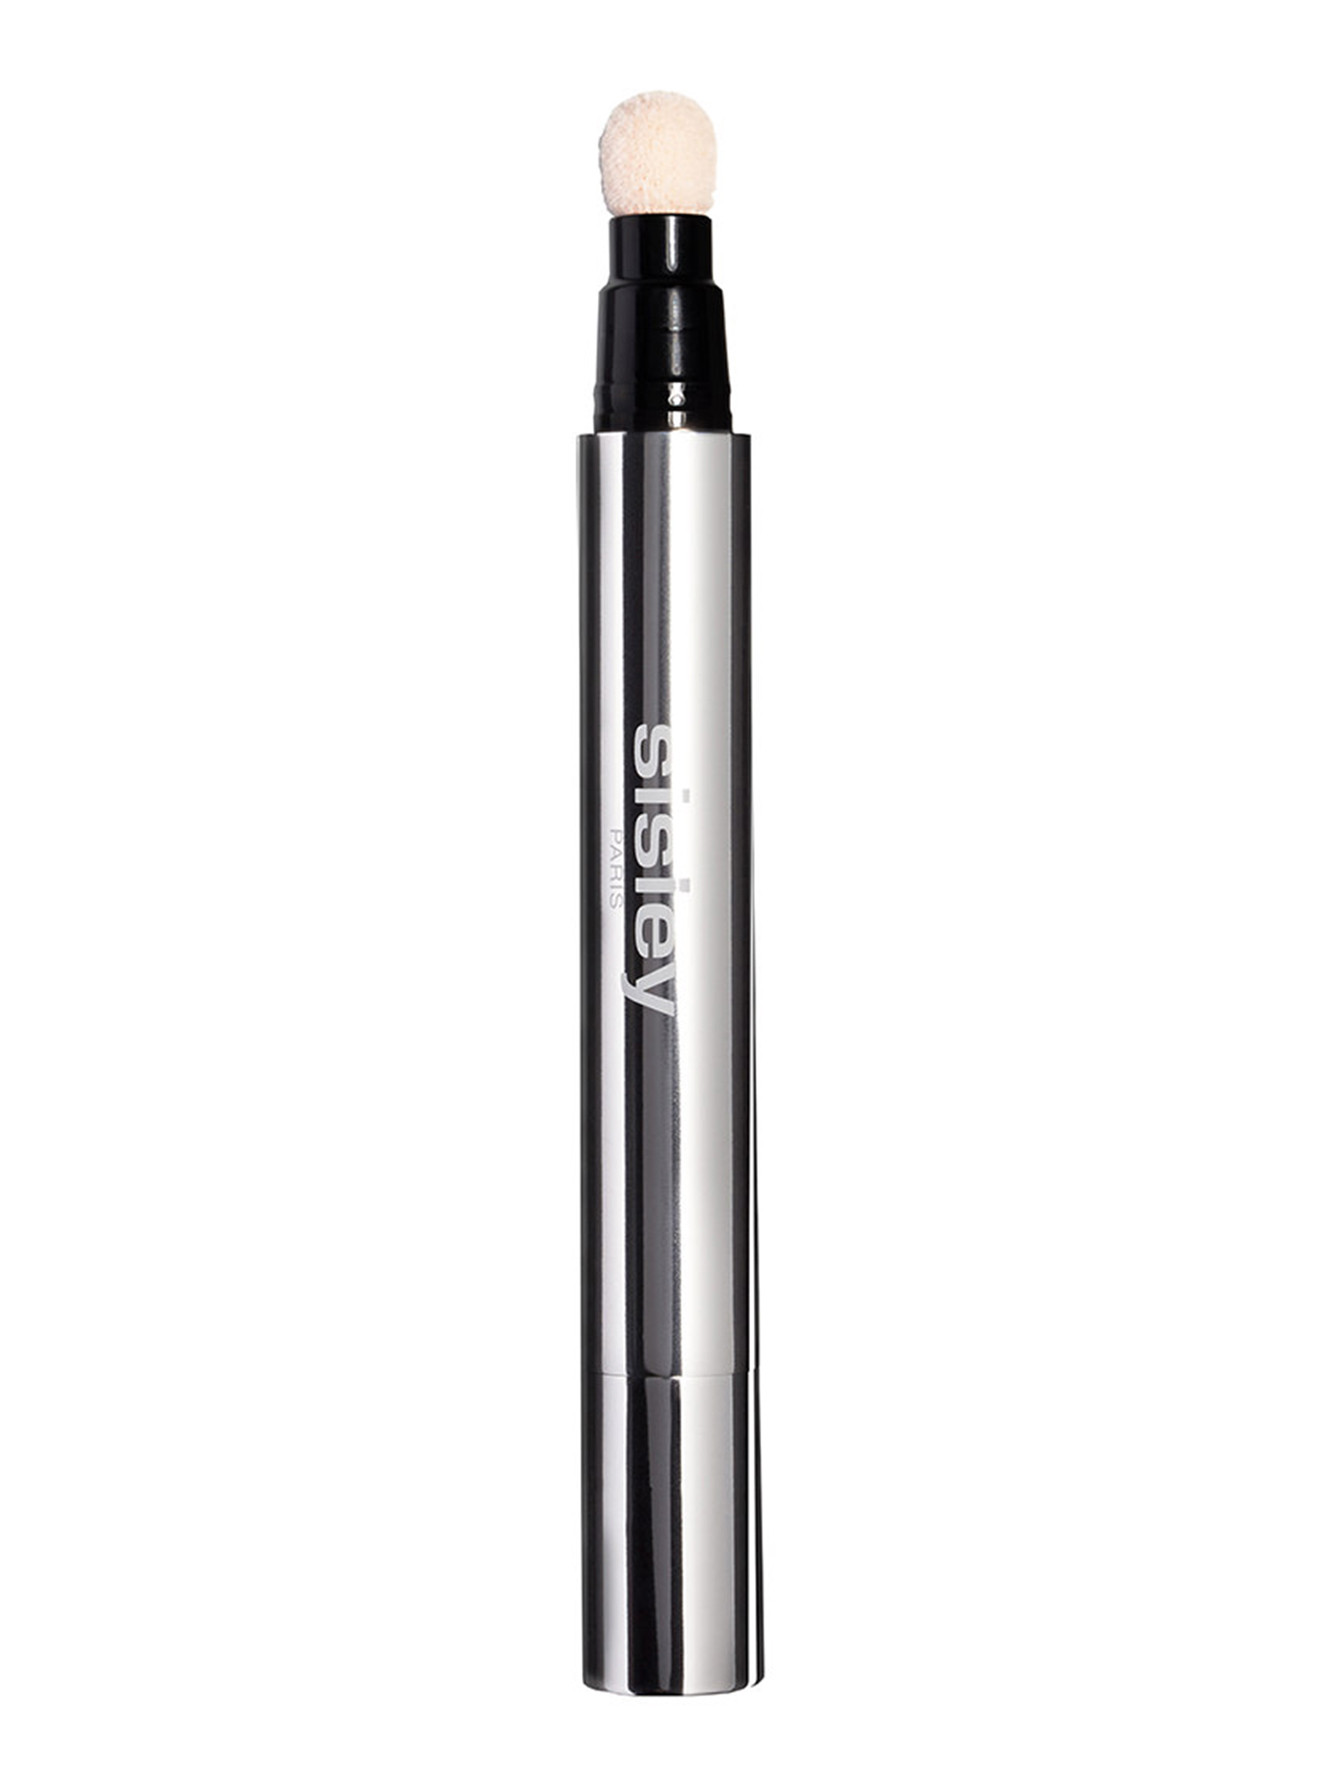 Хайлайтер-карандаш № 6 Золотисто-коричневый, Makeup - Общий вид